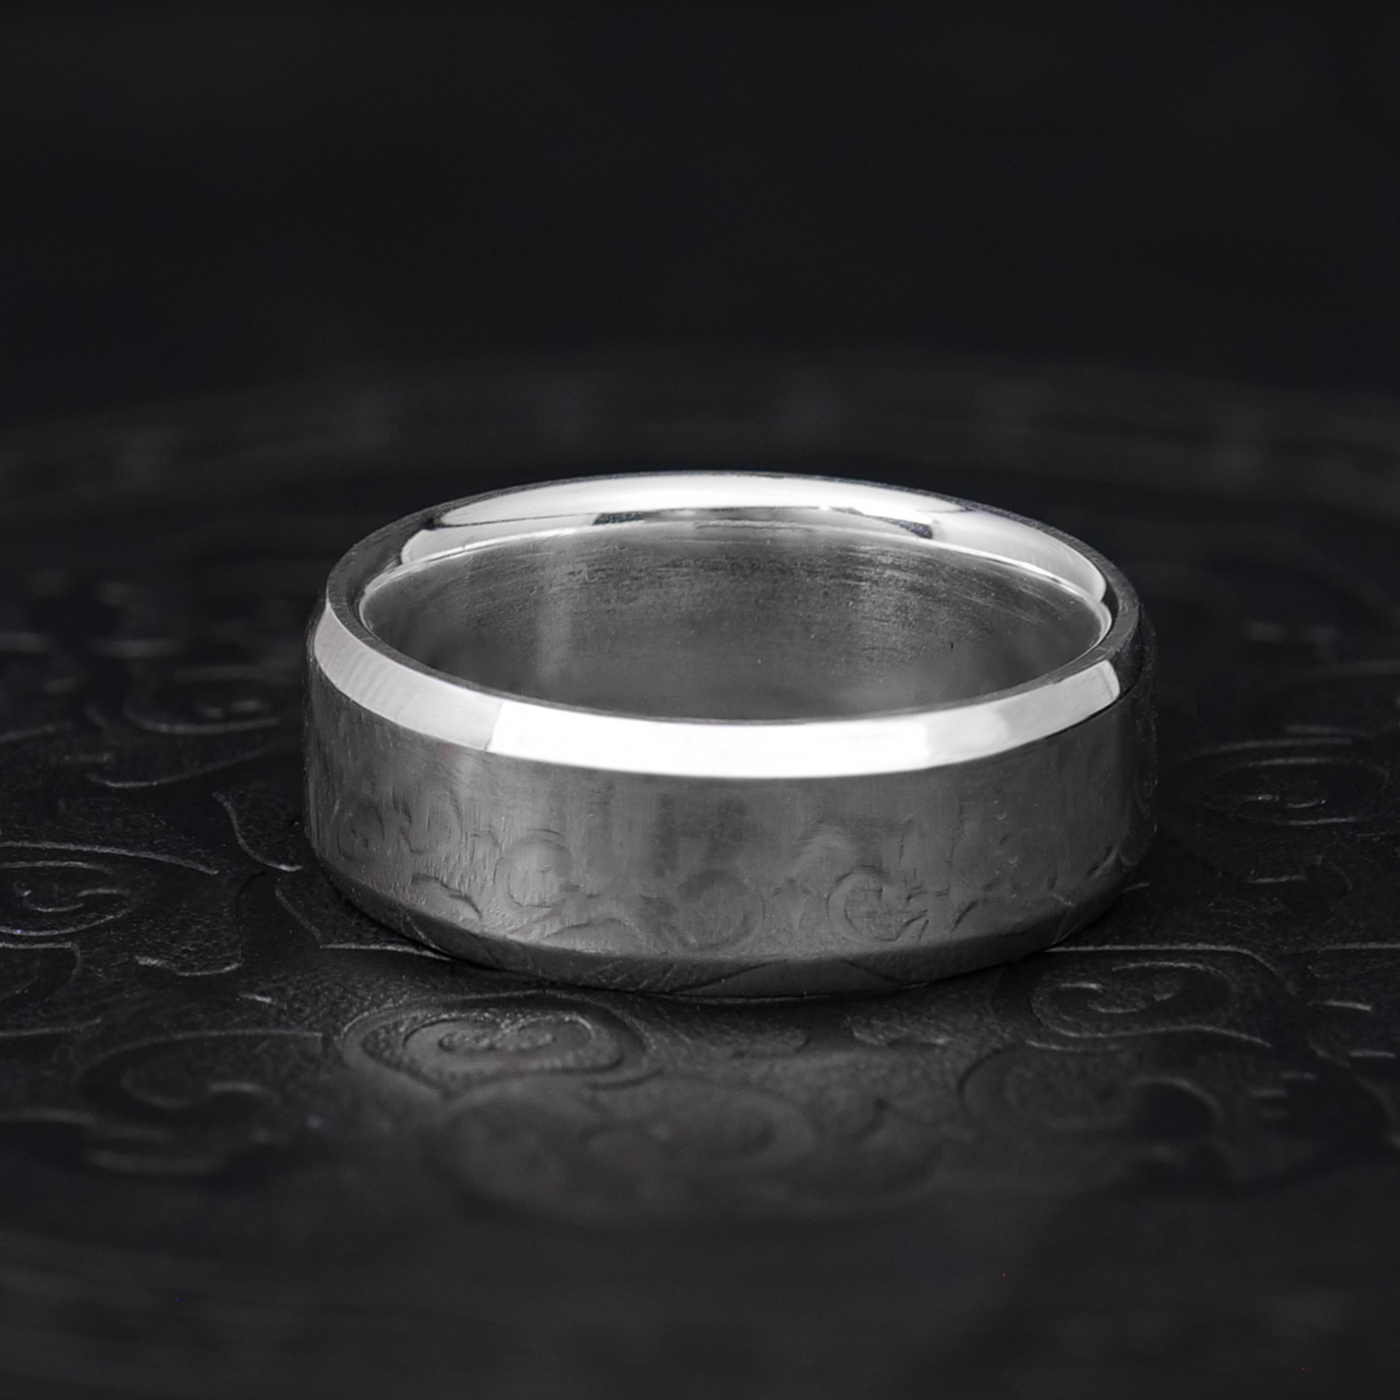 8mm Beveled Sterling Silver Ring - Patrick Adair Designs